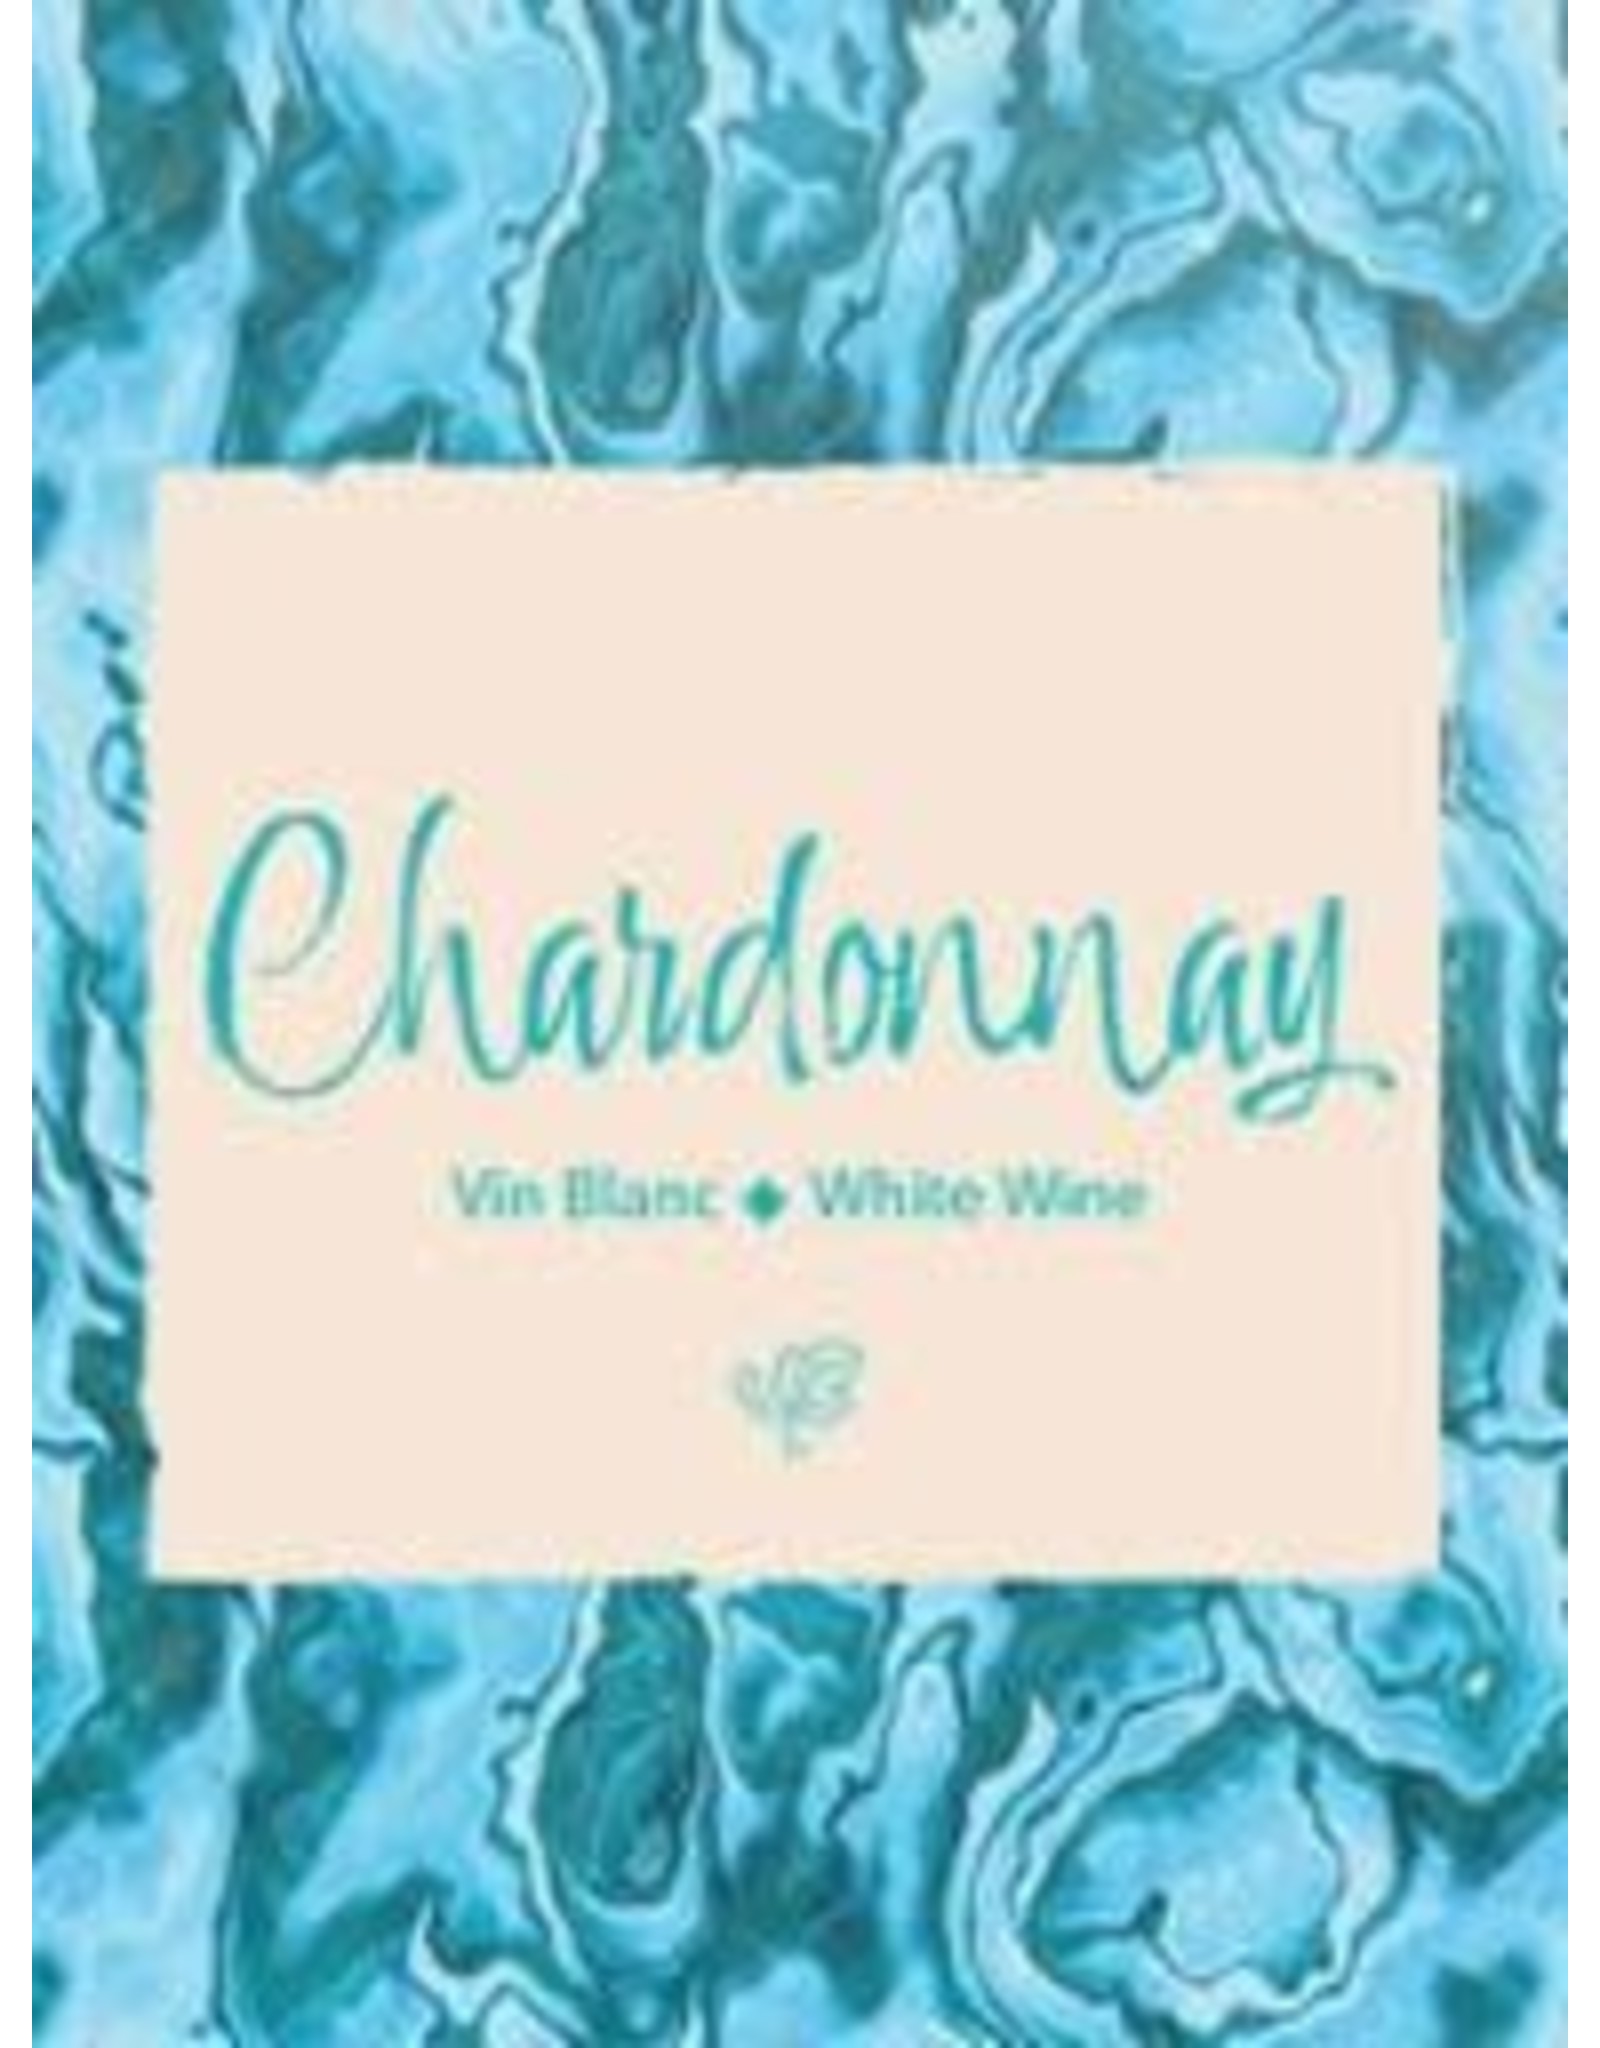 LD Carlson Chardonnay 30 ct Wine Labels